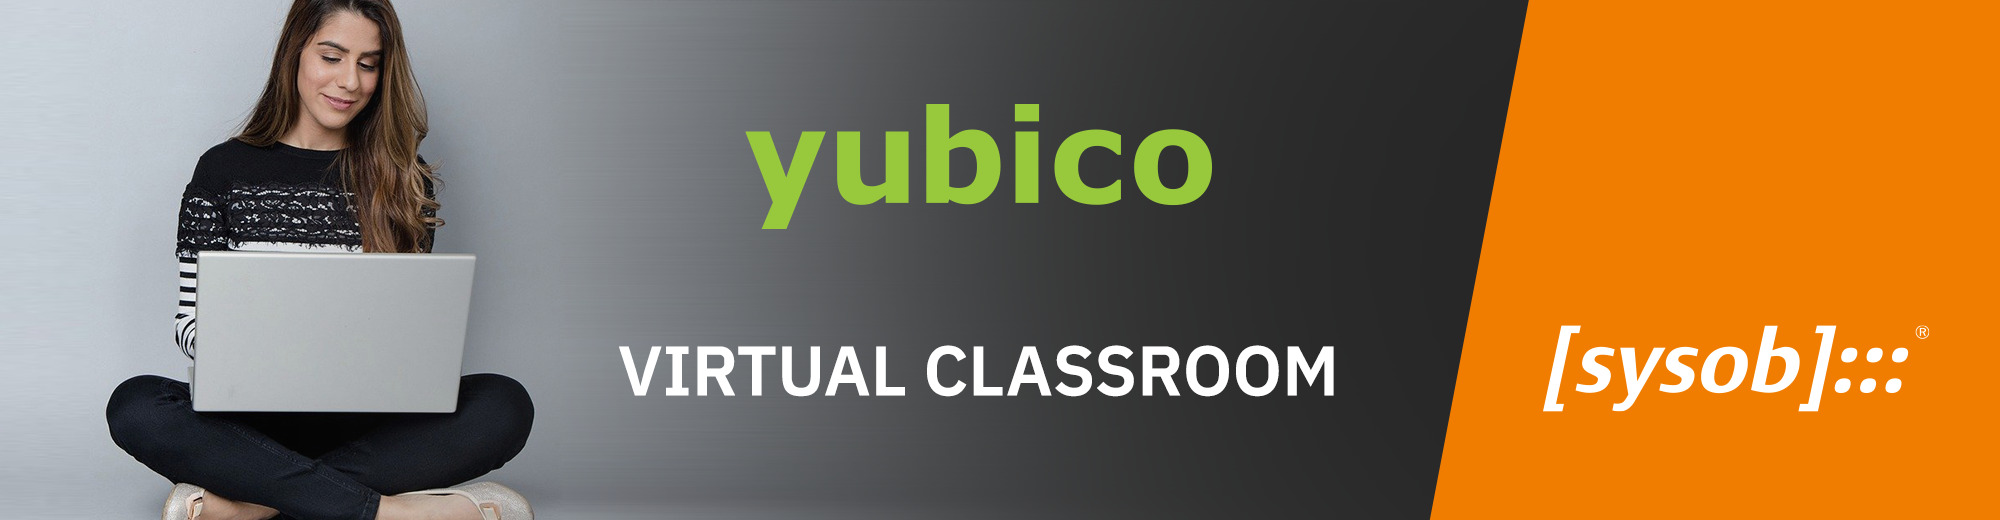 Yubico Online Training